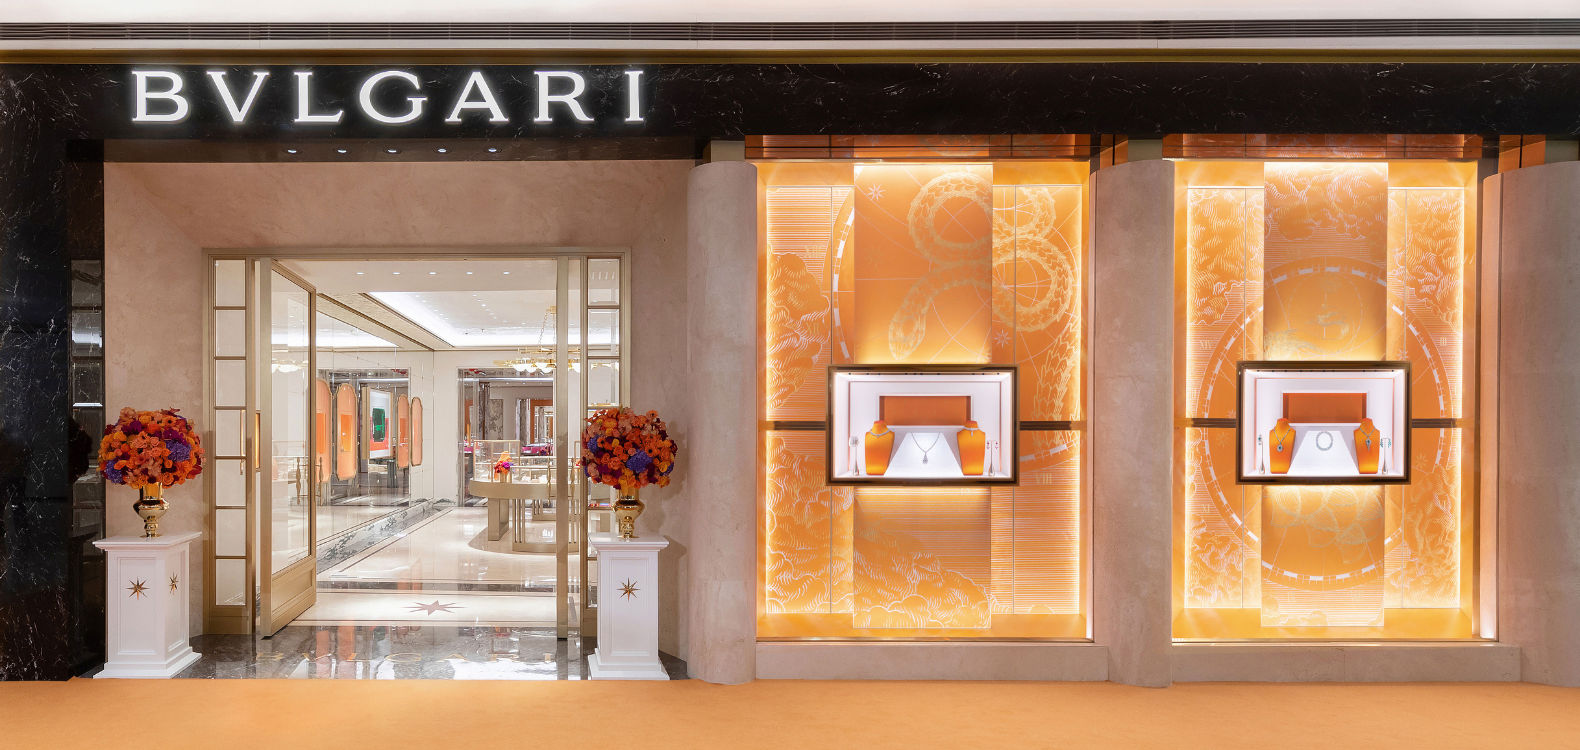 Bvlgari unveils a stunning new flagship store at Plaza 66, China